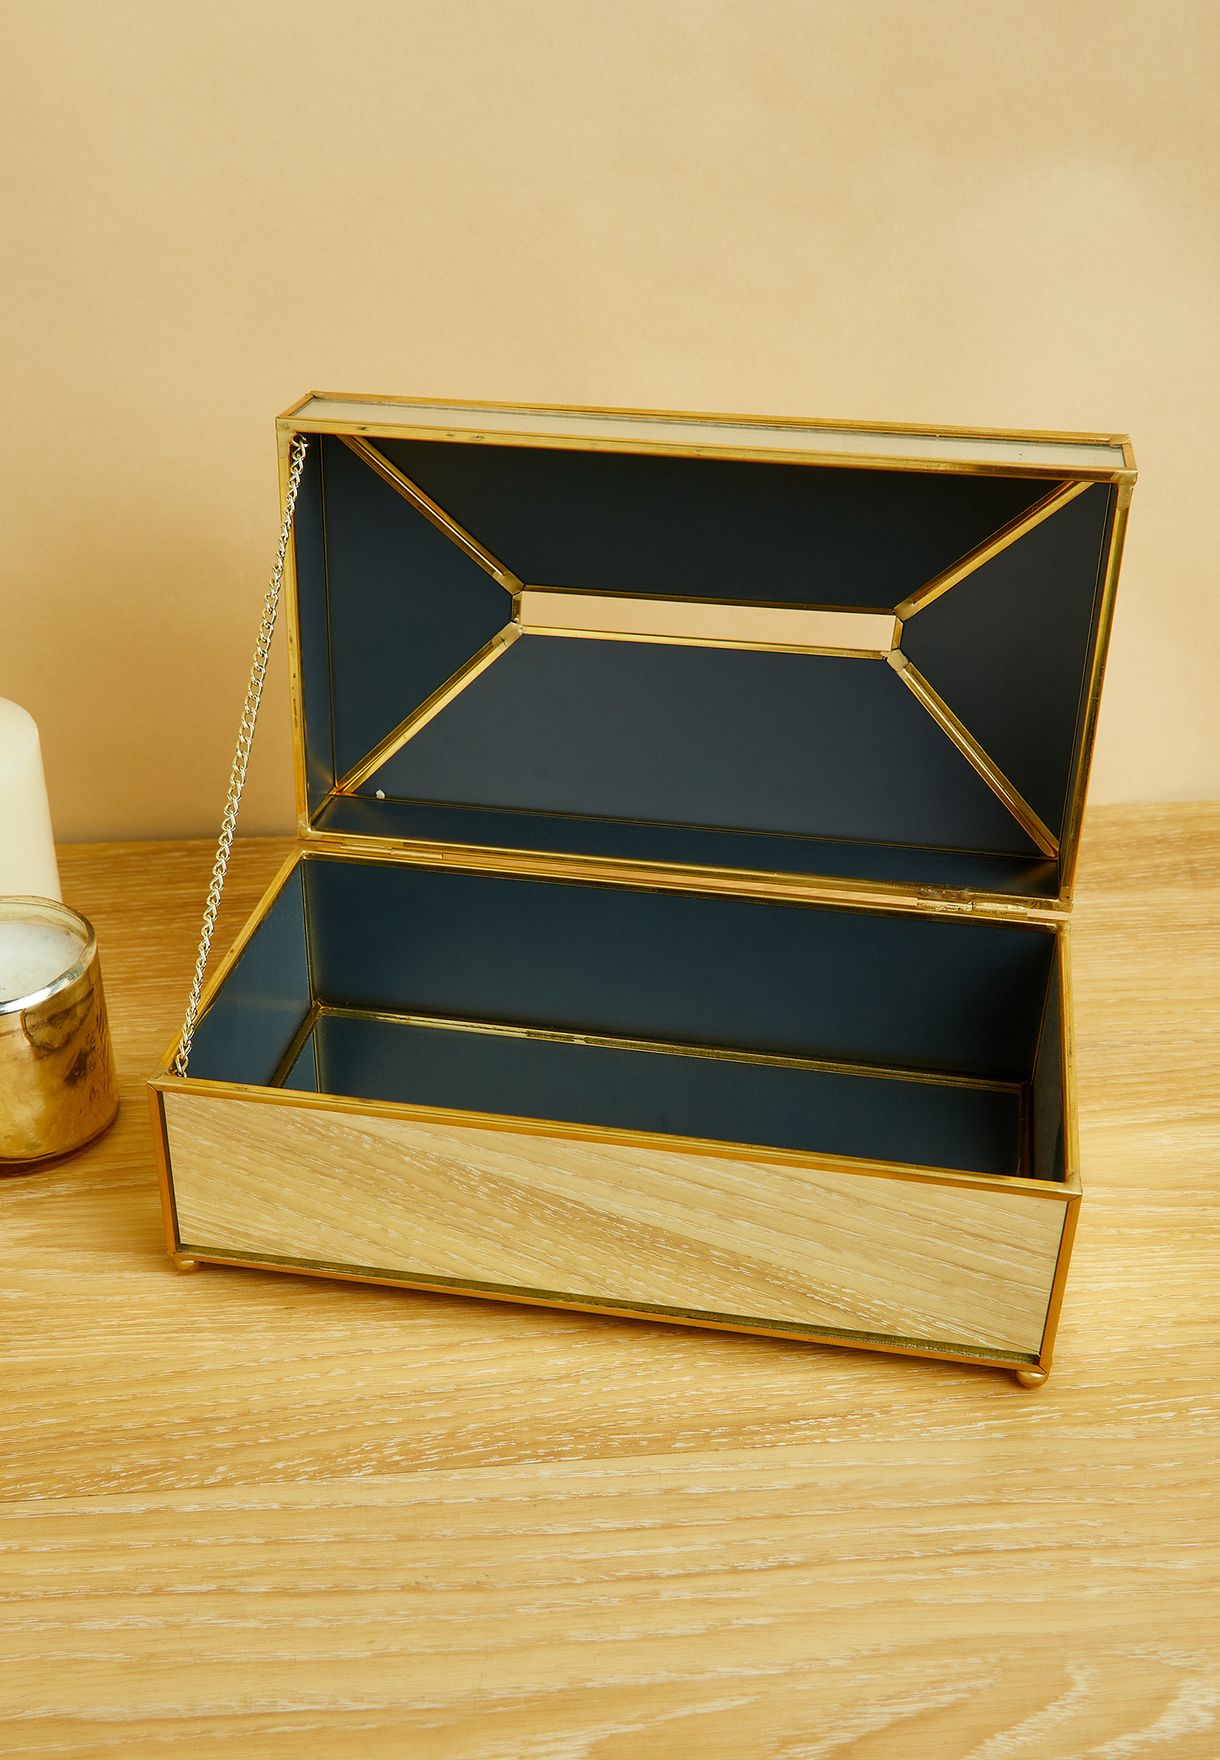 Mirror Finish Tissue Box With Gold Rim